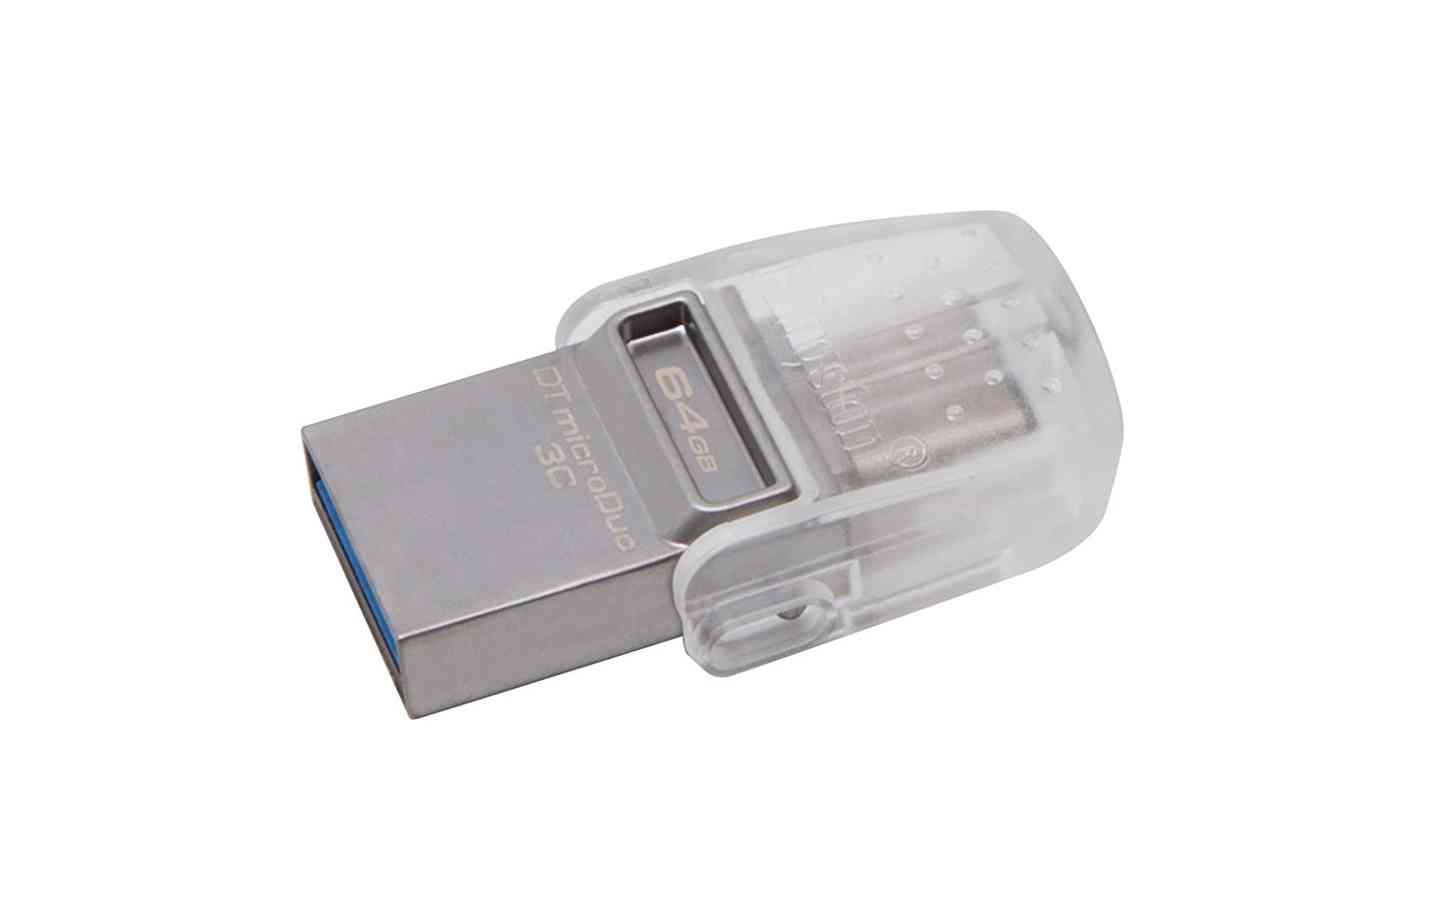 USB-C flash drive